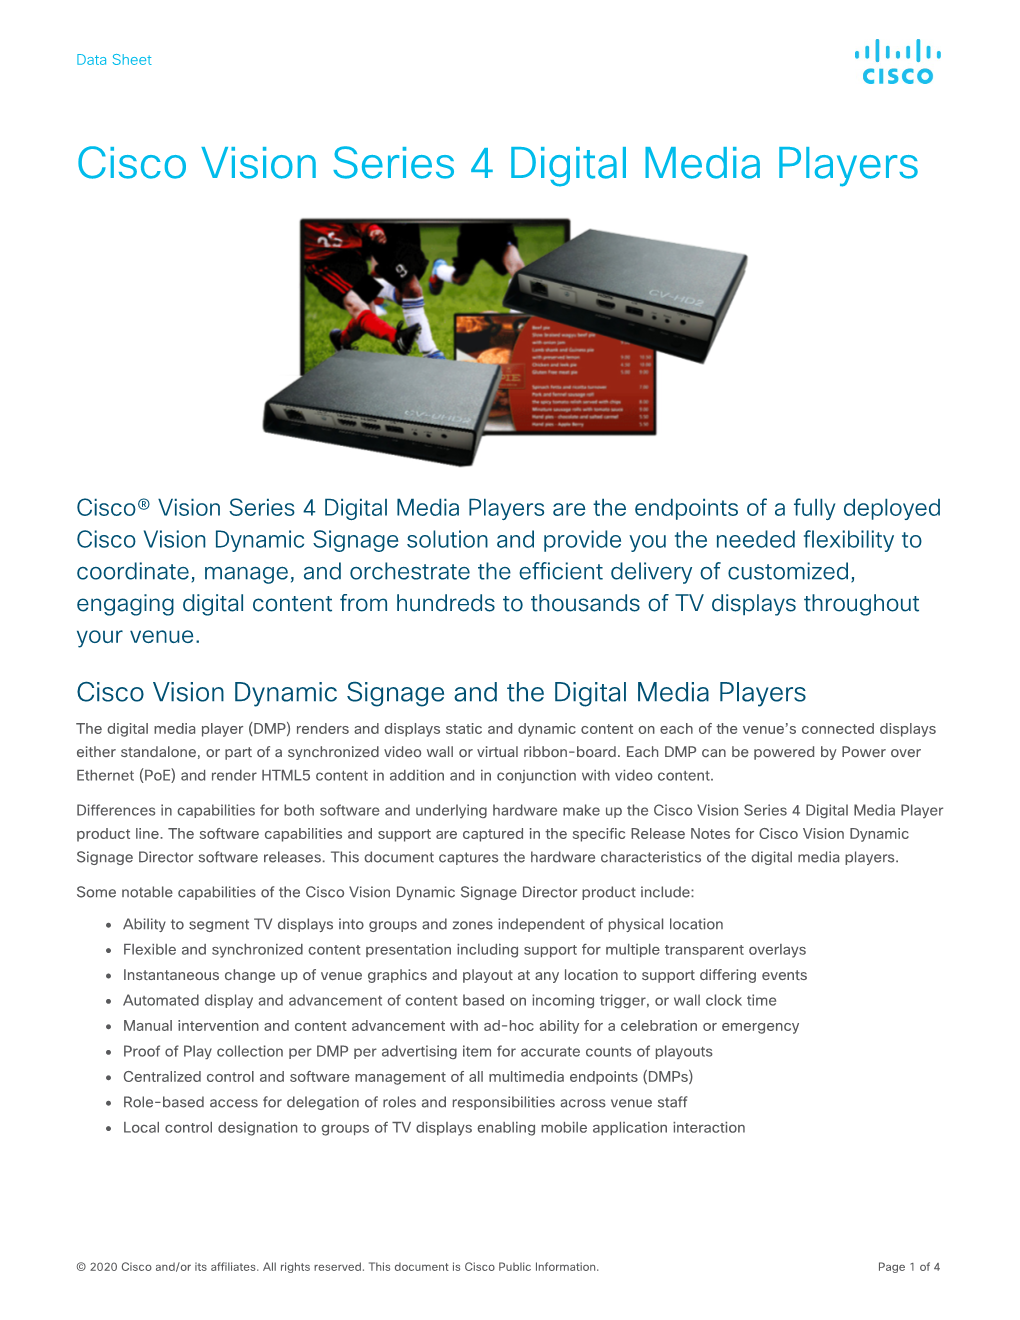 Cisco Vision Digital Media Players